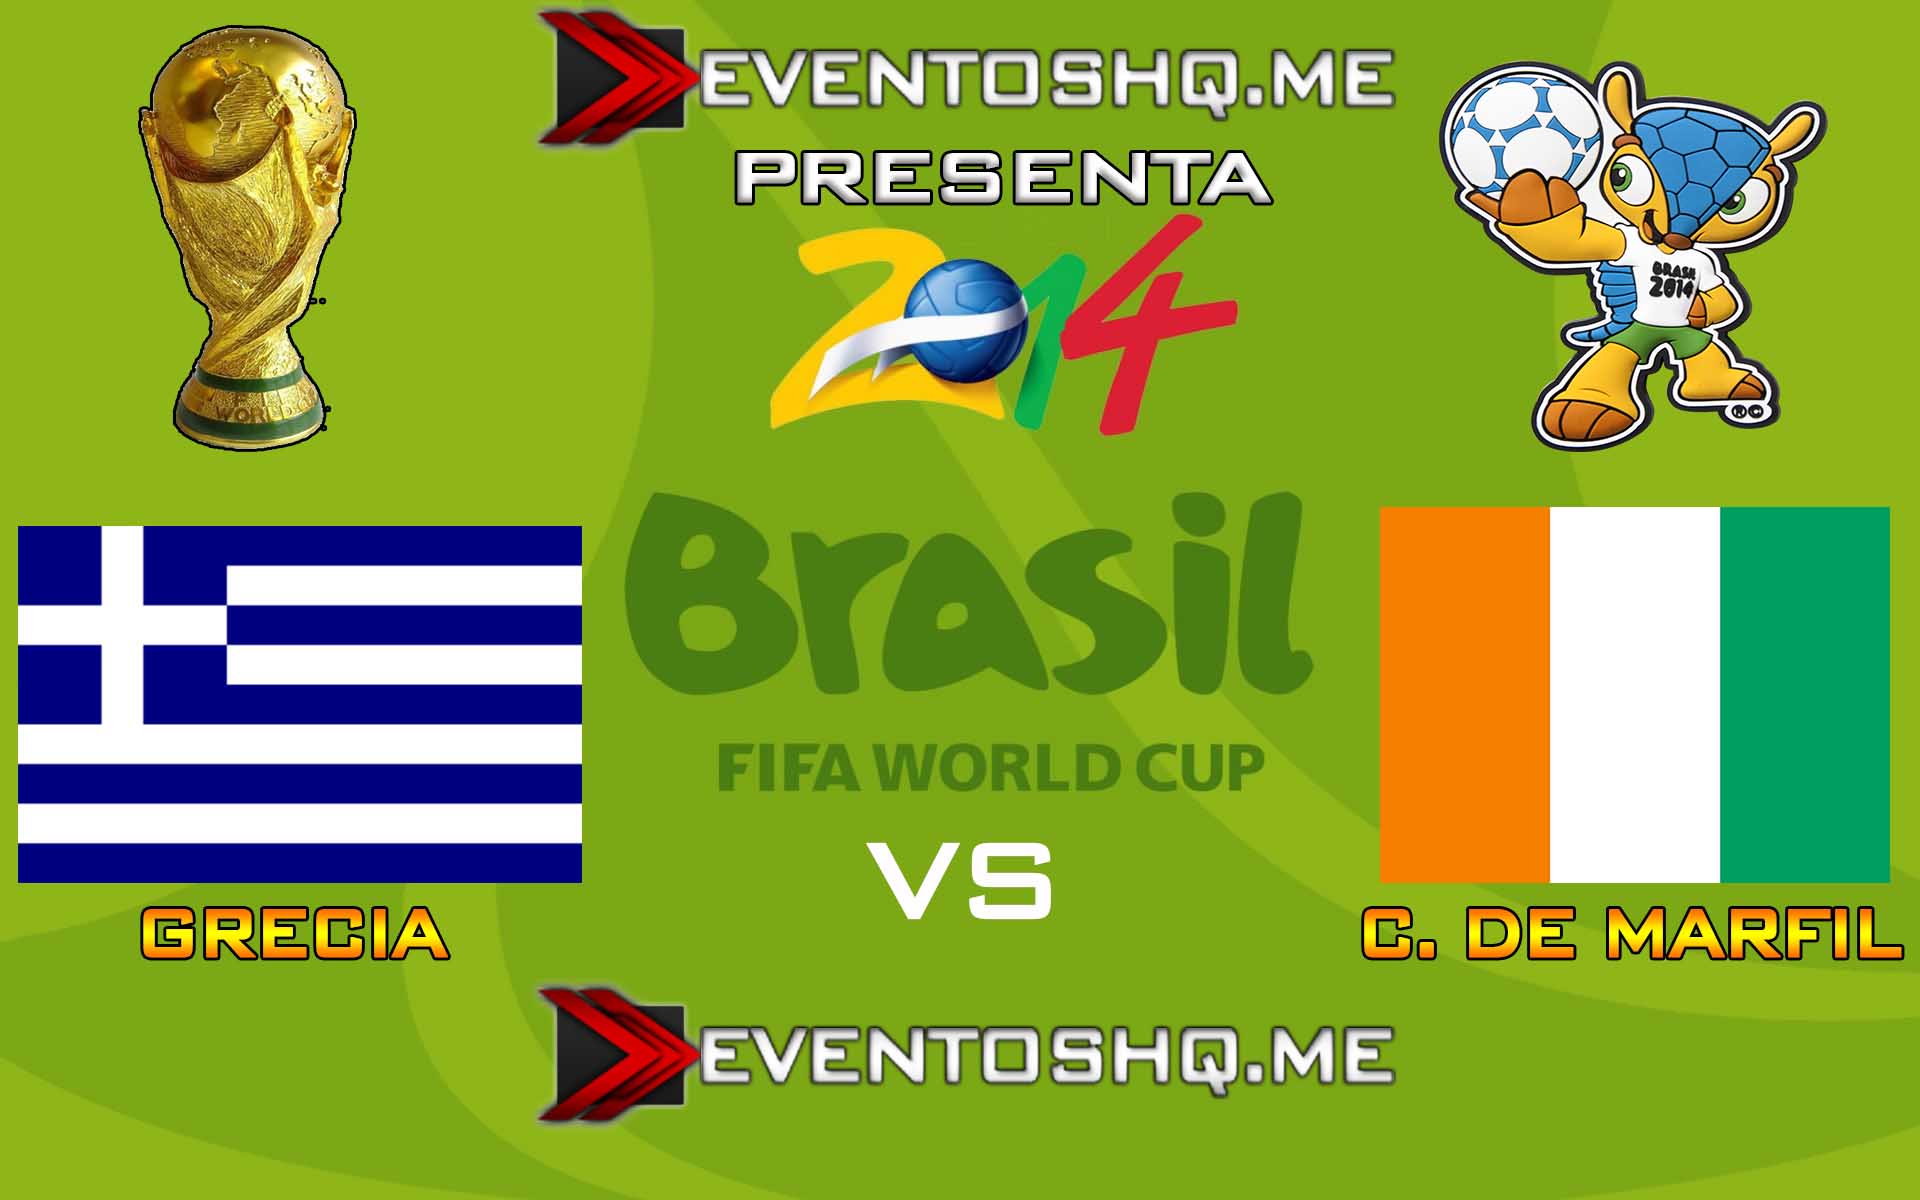 Ver en Vivo Grecia vs Costa de Marfil Mundial Brasil 2014 www.eventoshq.me